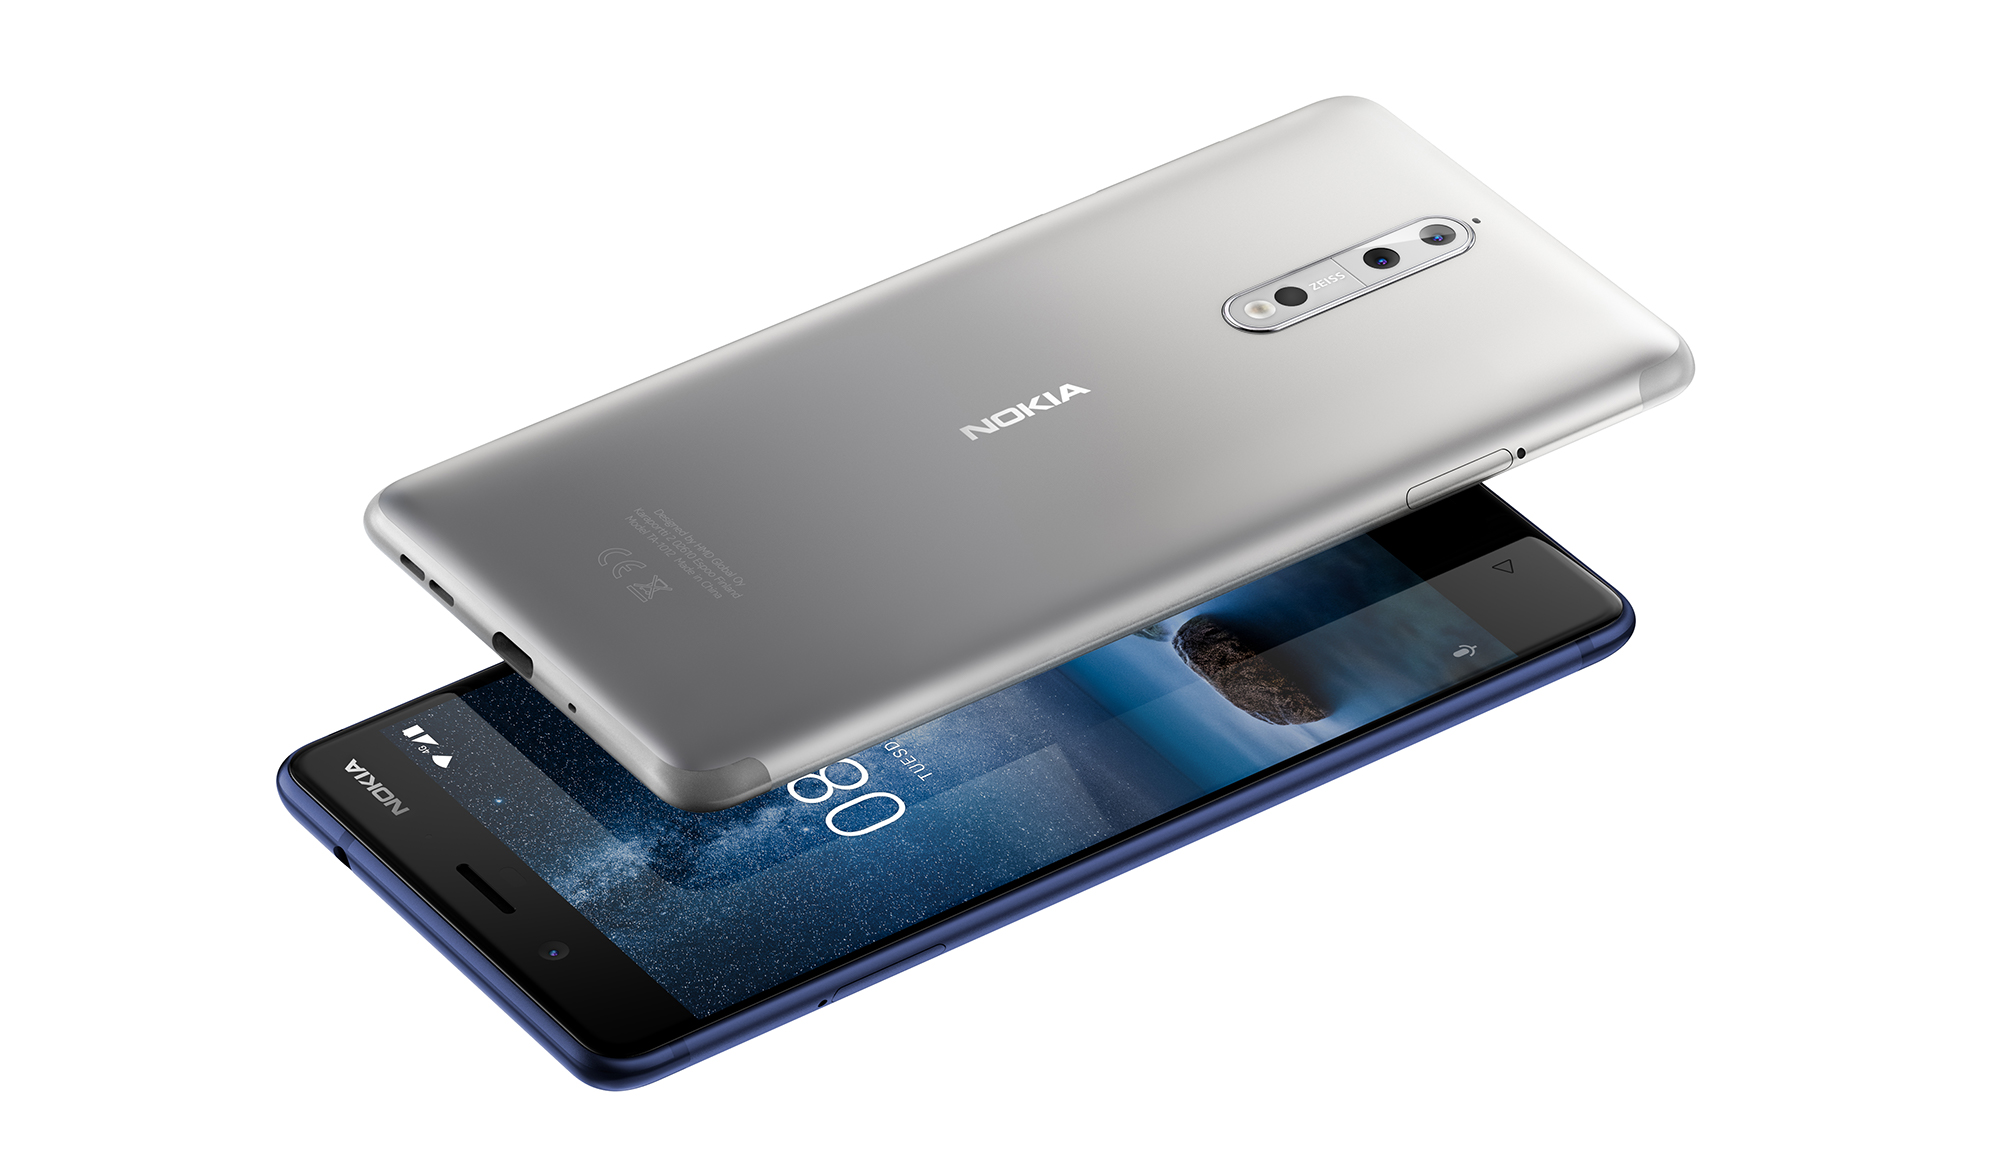 Nokia 8 New Nokia 8 Smartphone Set To Take On iPhone 8 & Galaxy Note 8